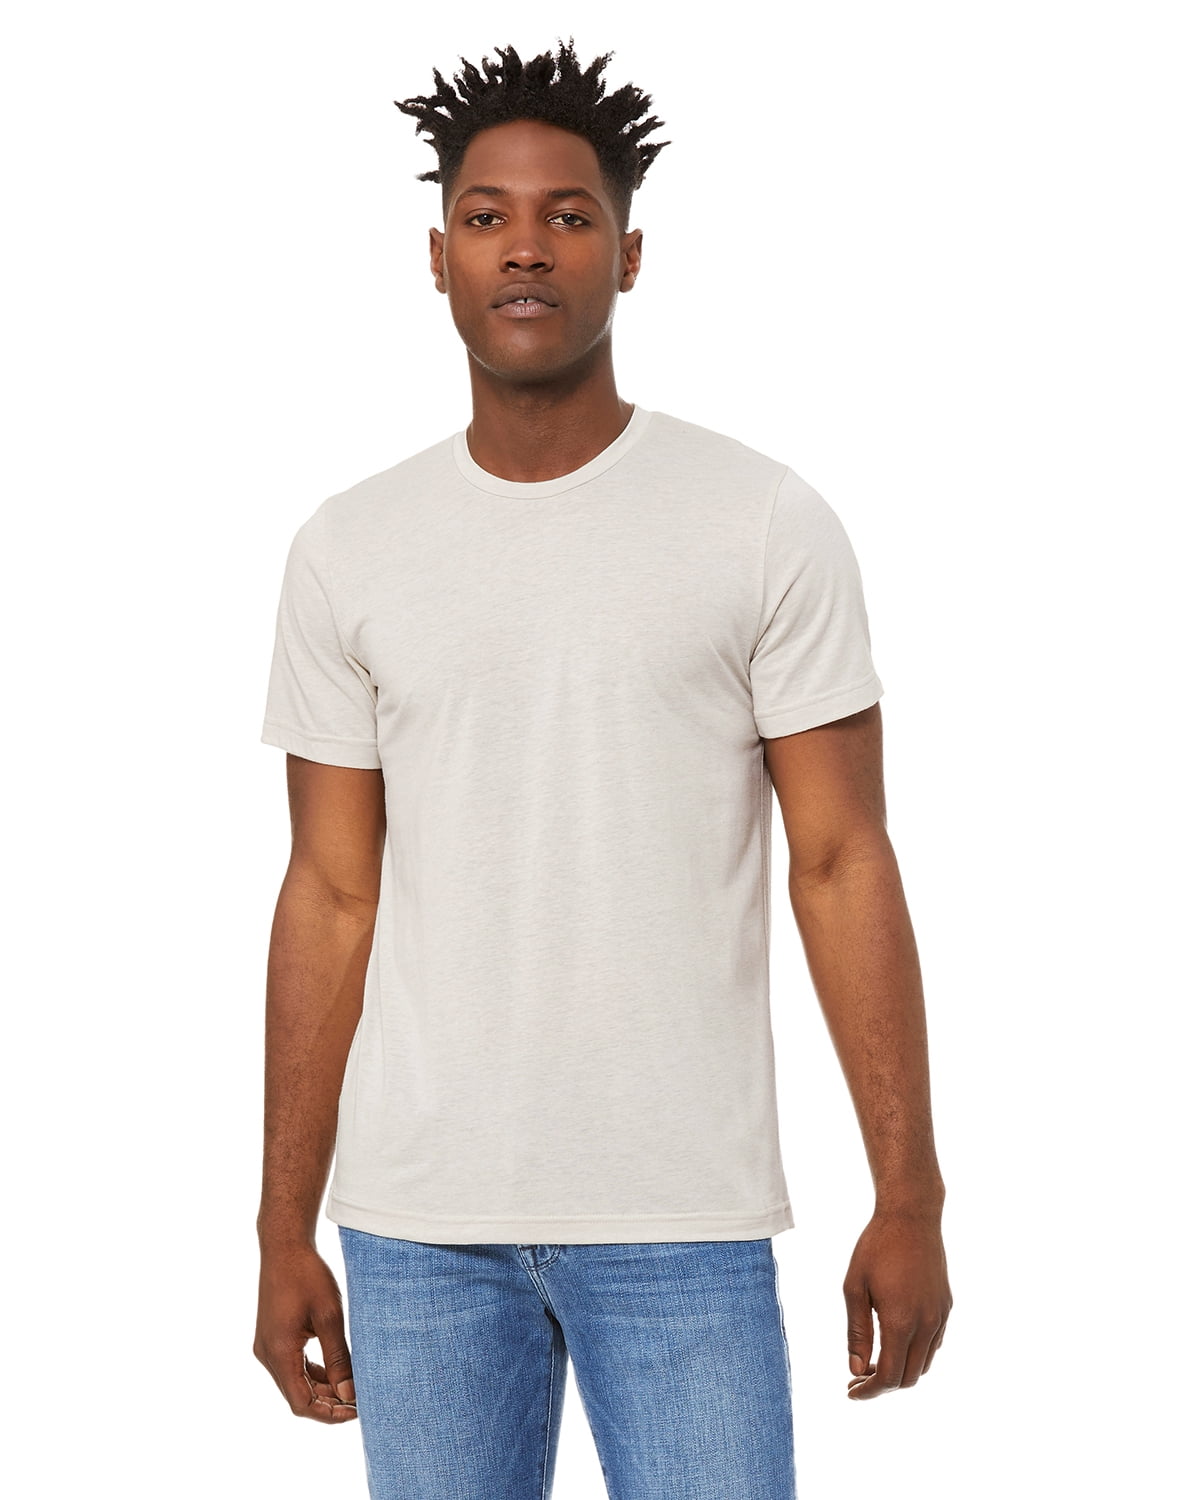 BELLA+CANVAS - The Unisex Triblend T-Shirt - CEMENT TRIBLEND - 2XL ...